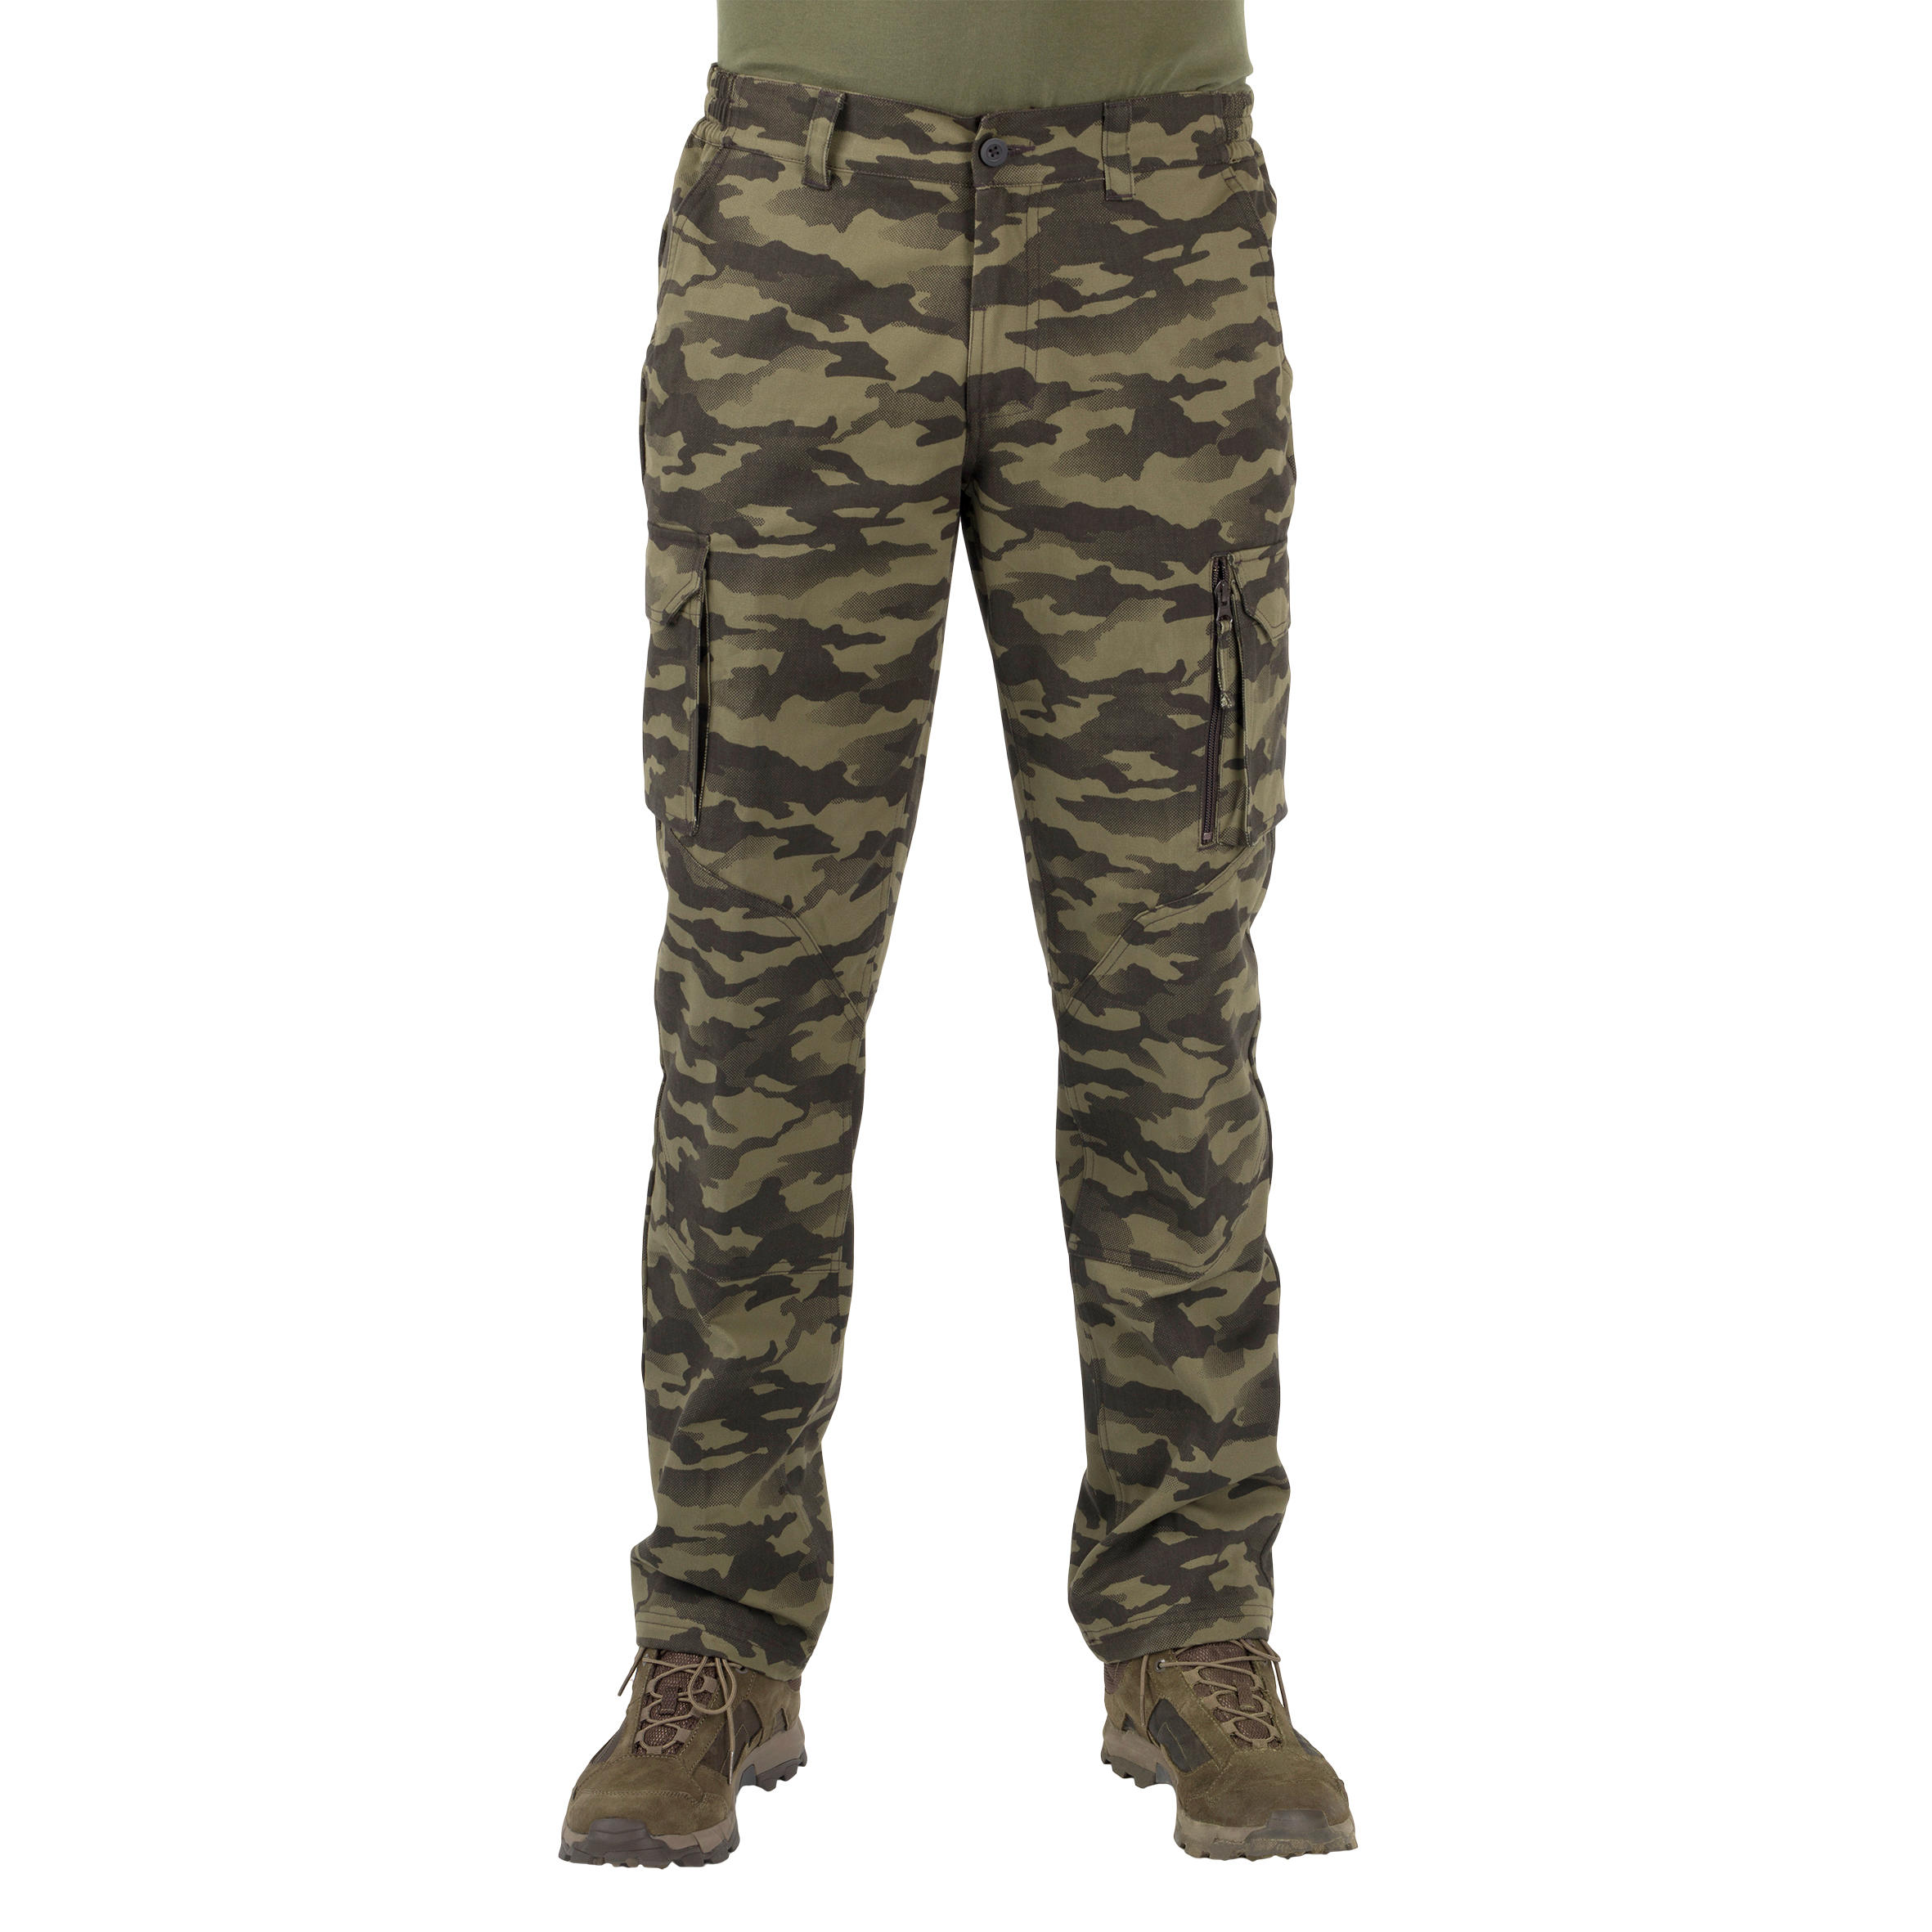 Men Cargo Trousers Pants Army Military Camo Print SG-520 - Camo